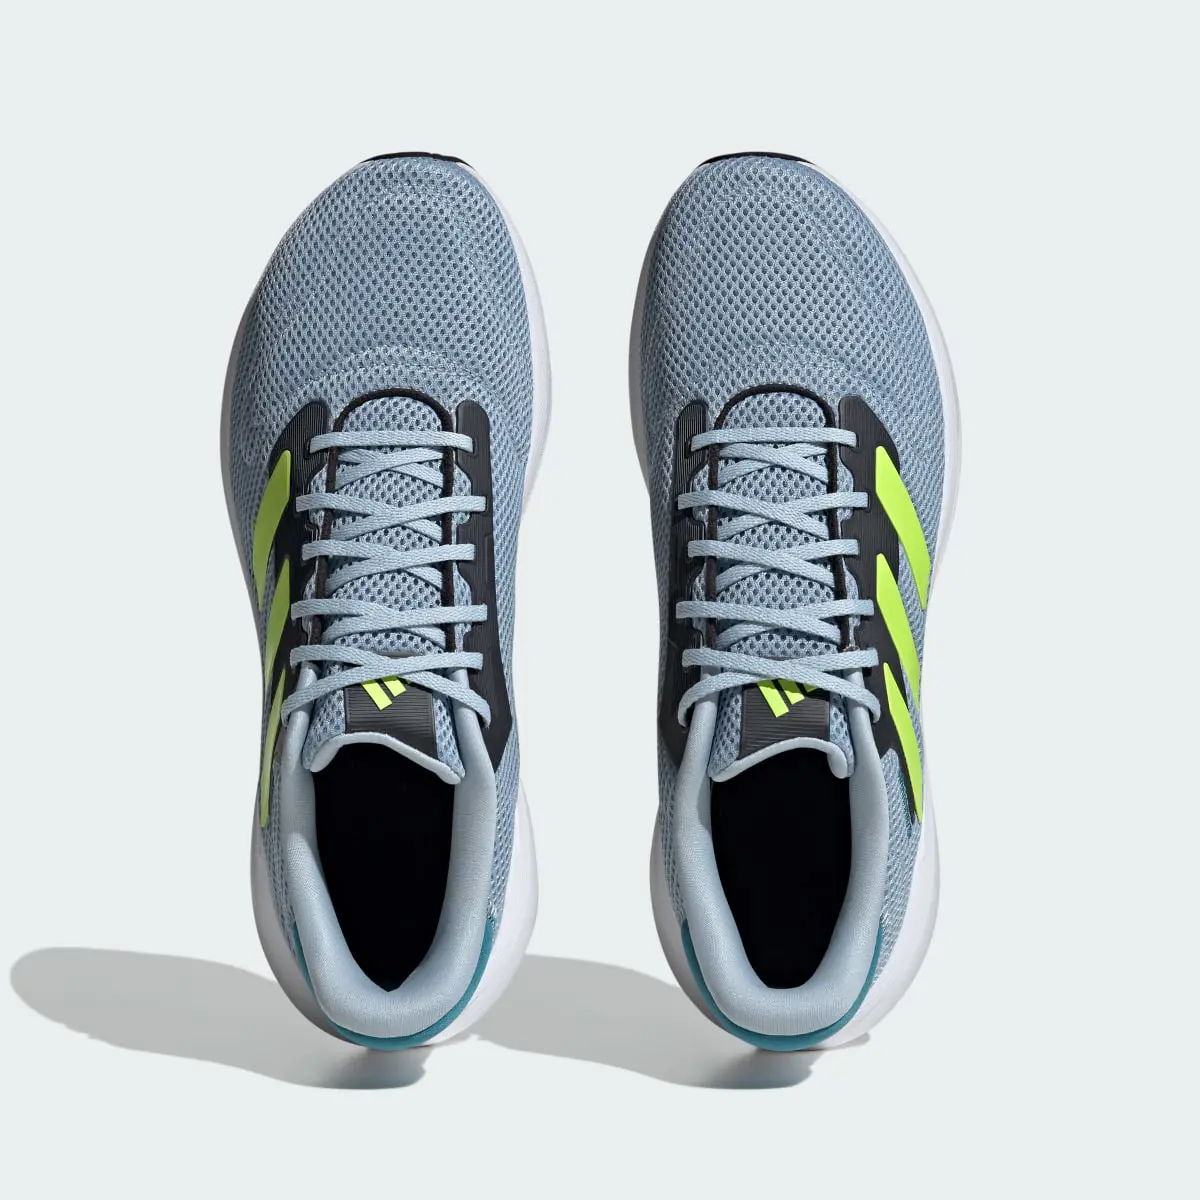 Adidas Response Runner Shoes. 3